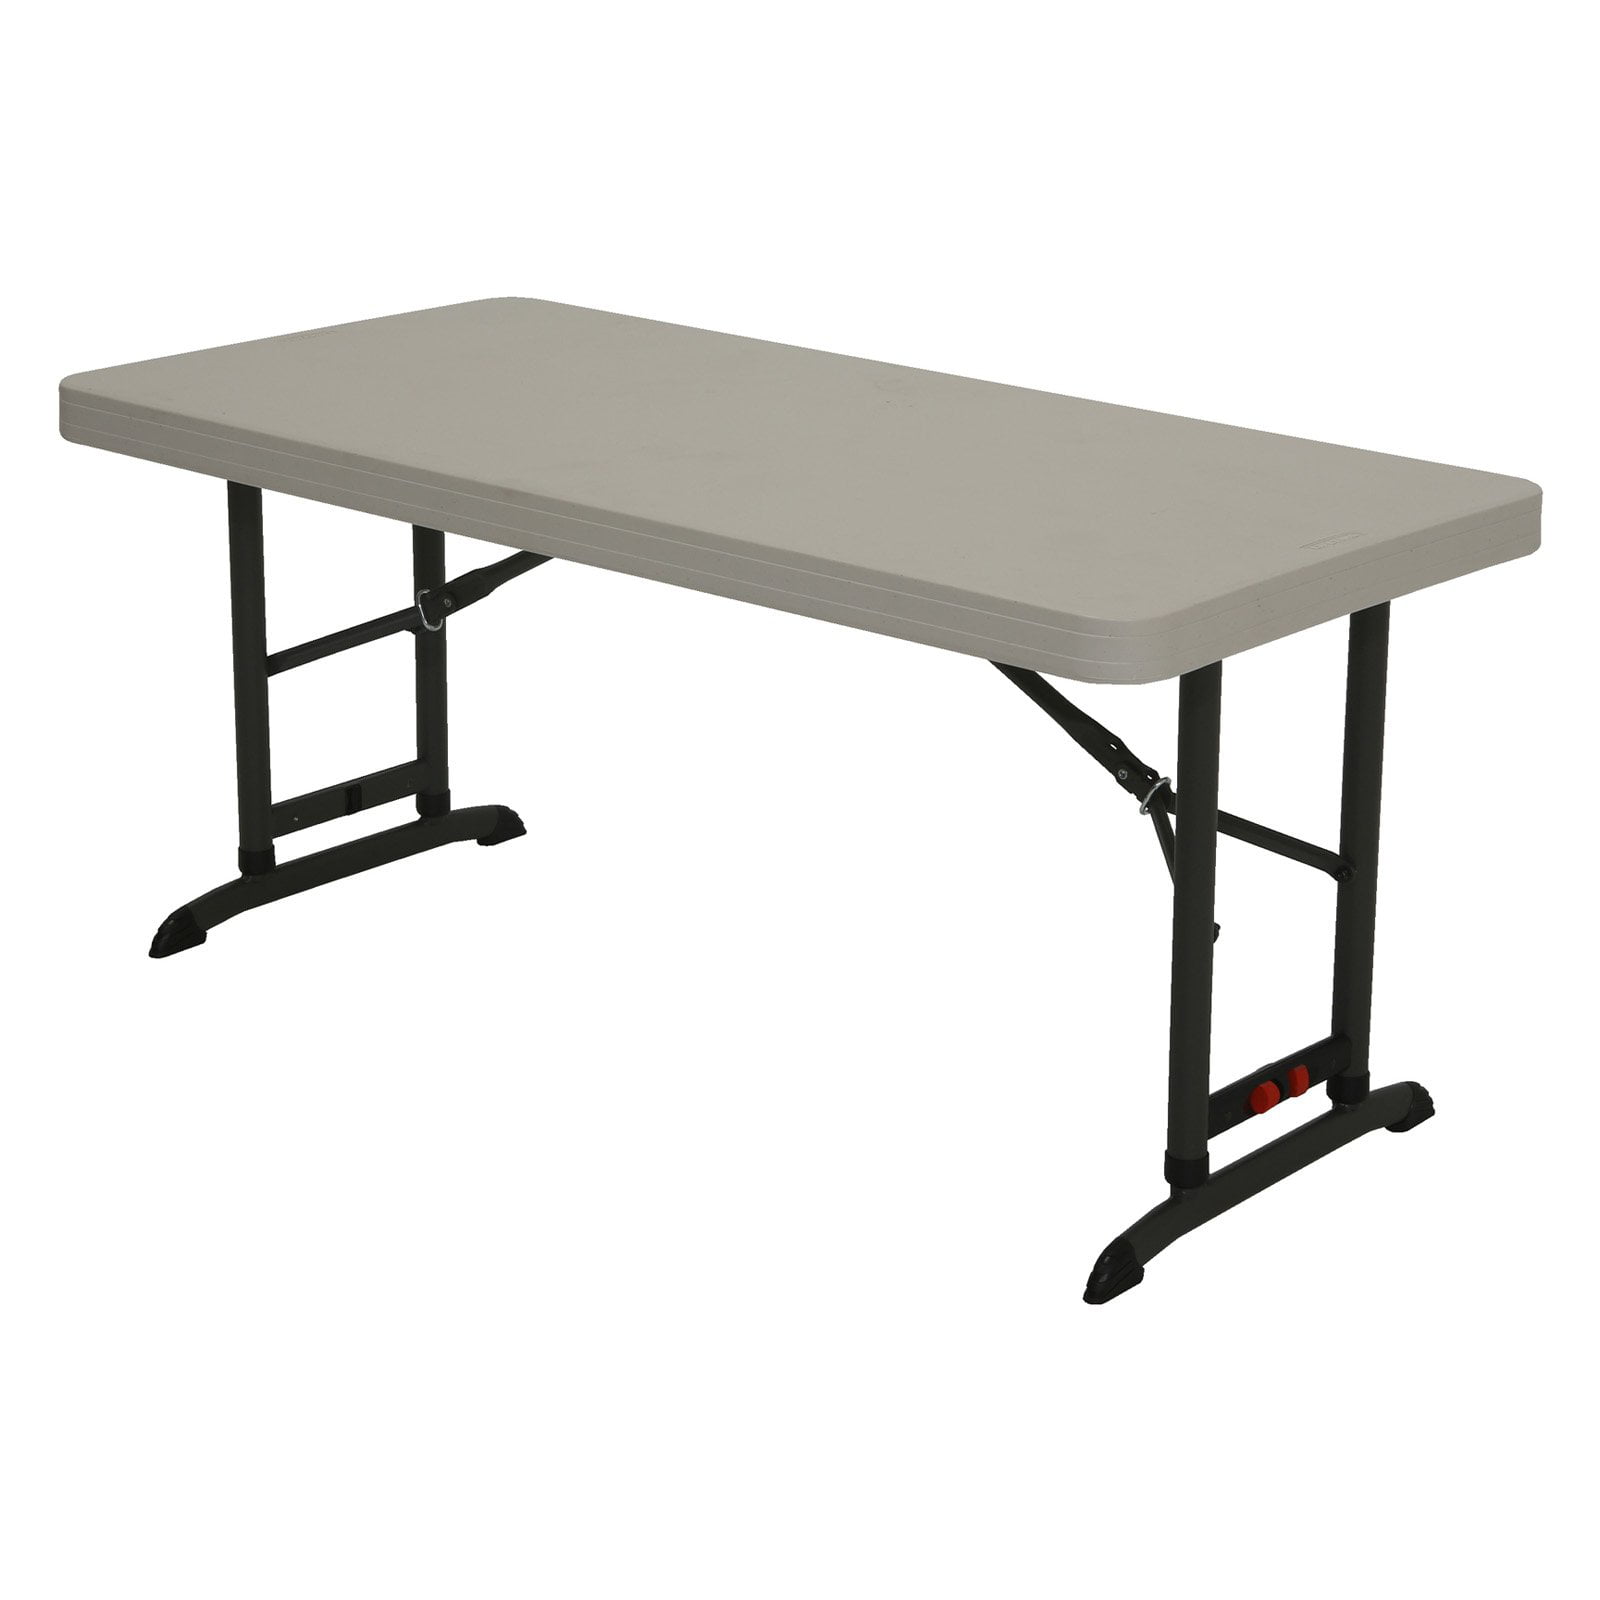 4 ft Lightweight Indoor/ Outdoor Commercial Adjustable Folding Table 